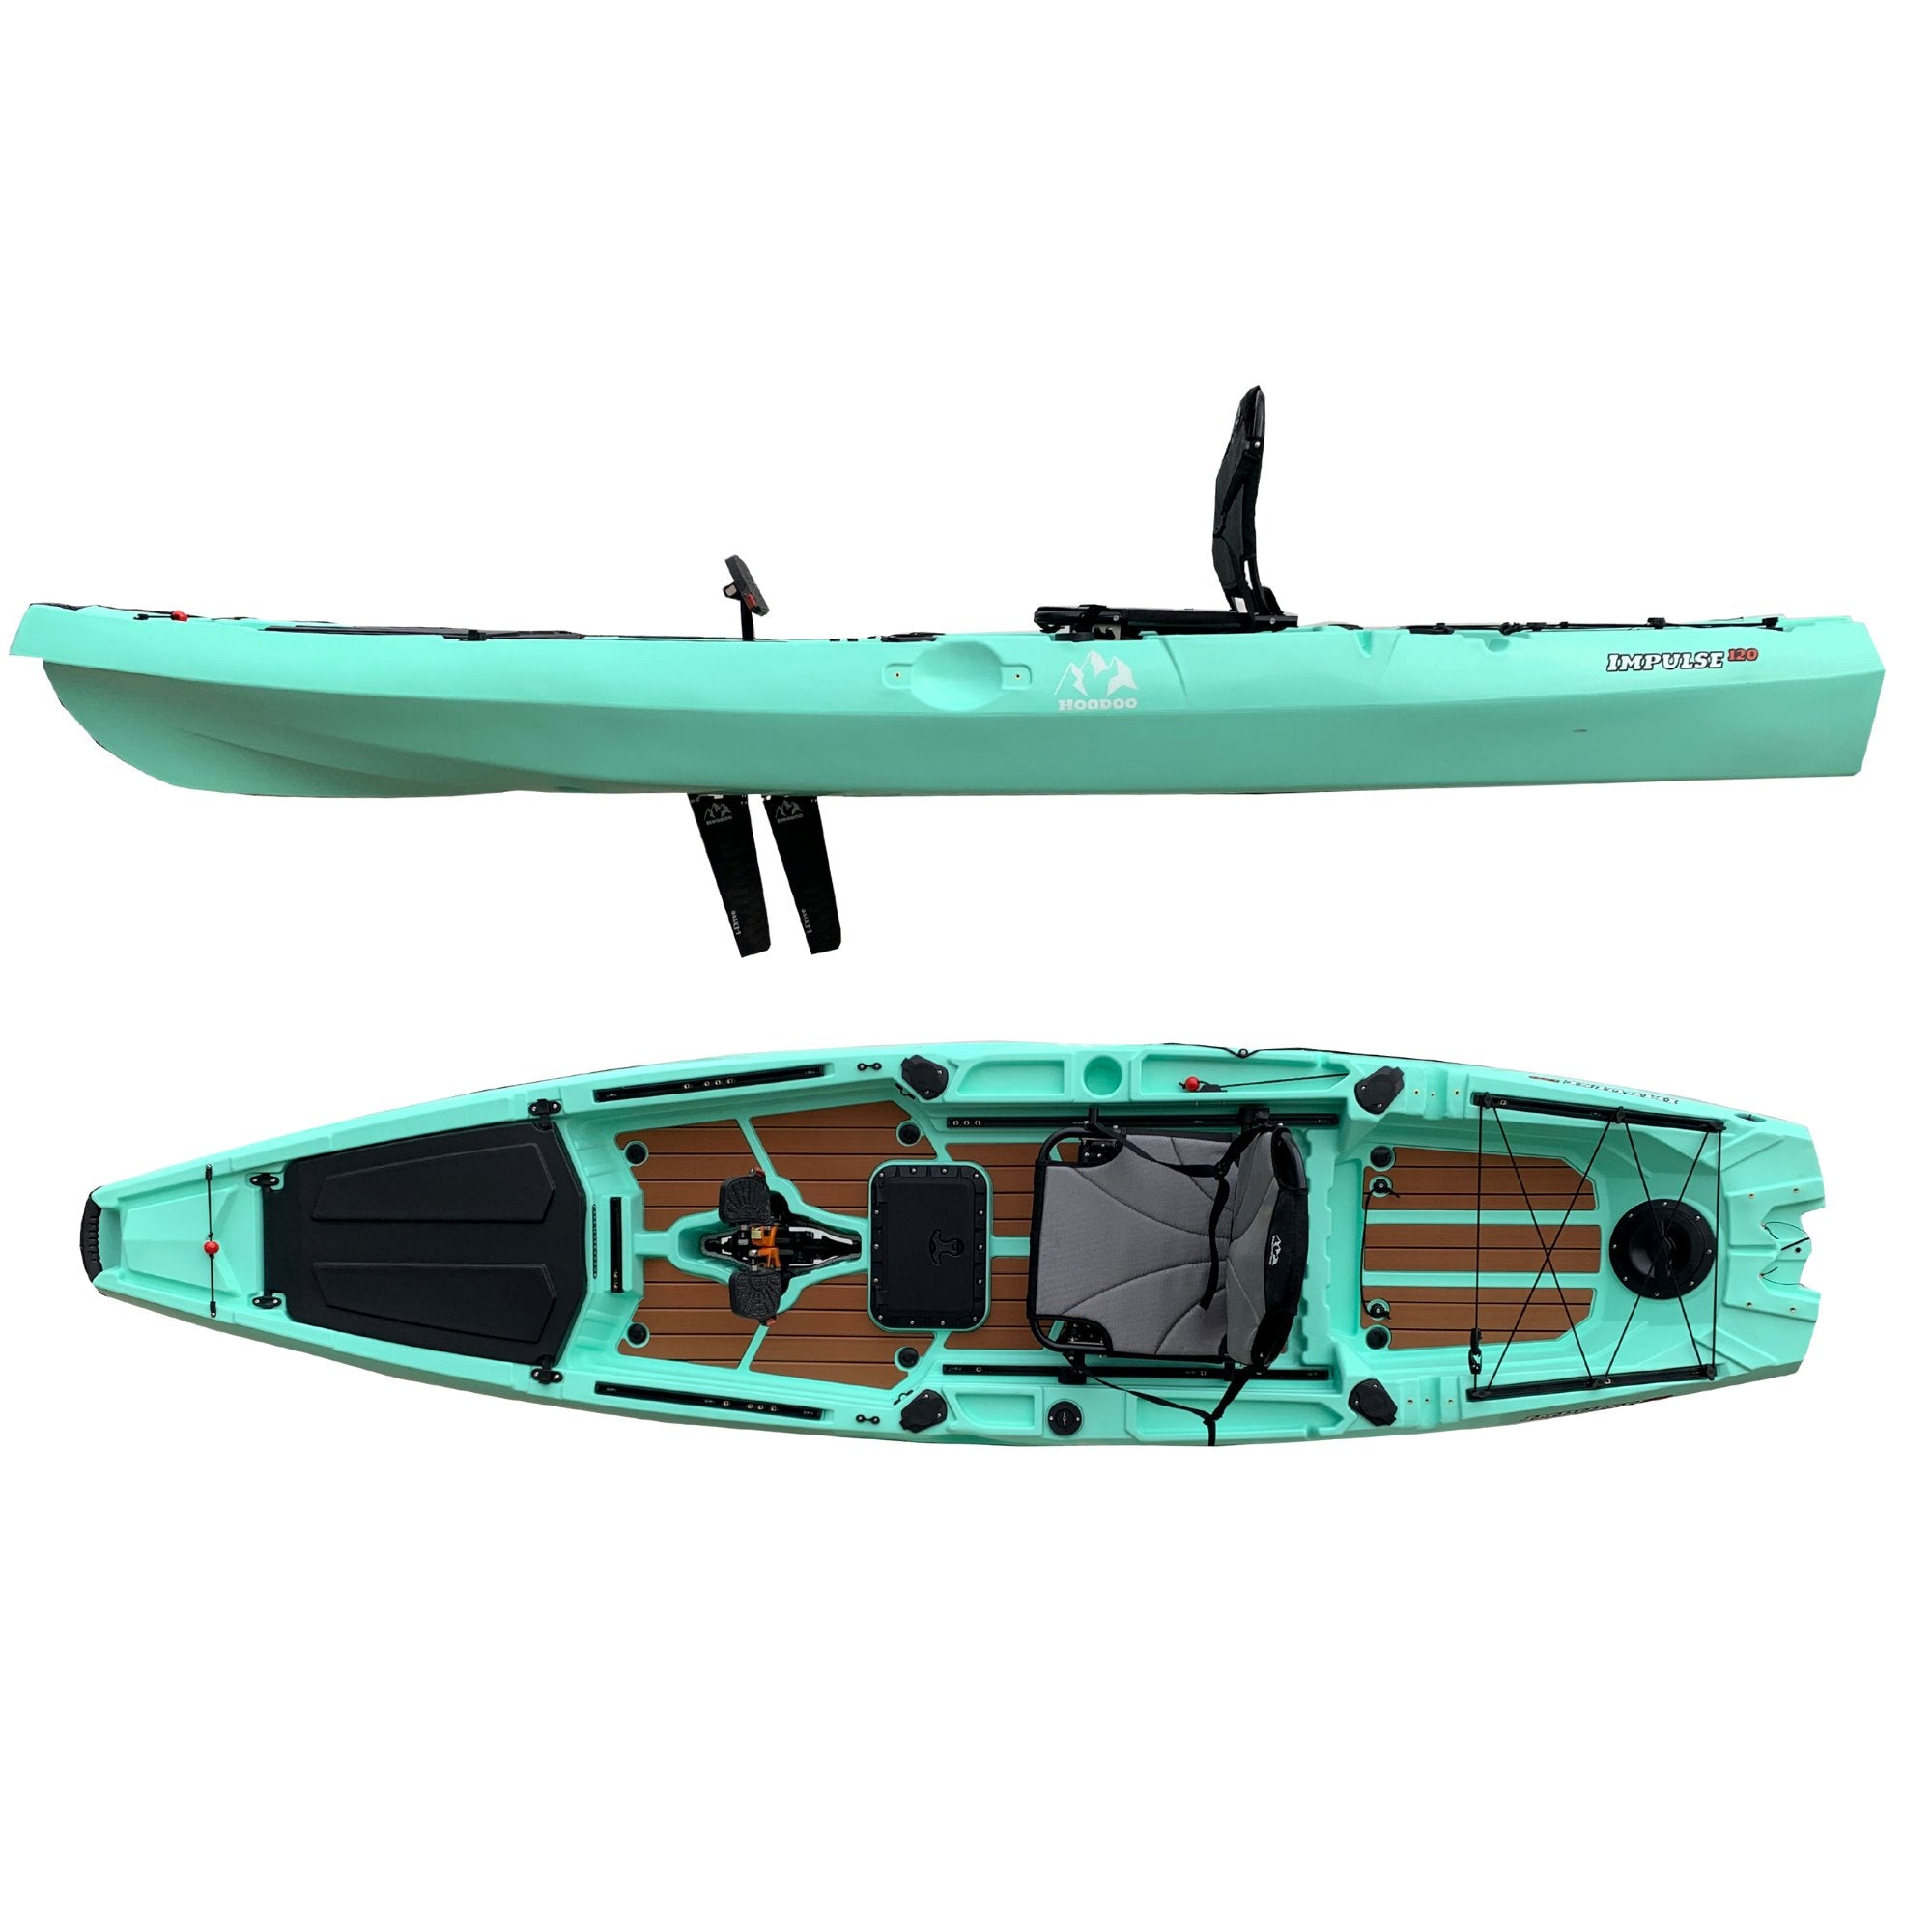 YakGear Ambush Camo Kayak Cover and Hunting Blind - T-H Marine Supplies